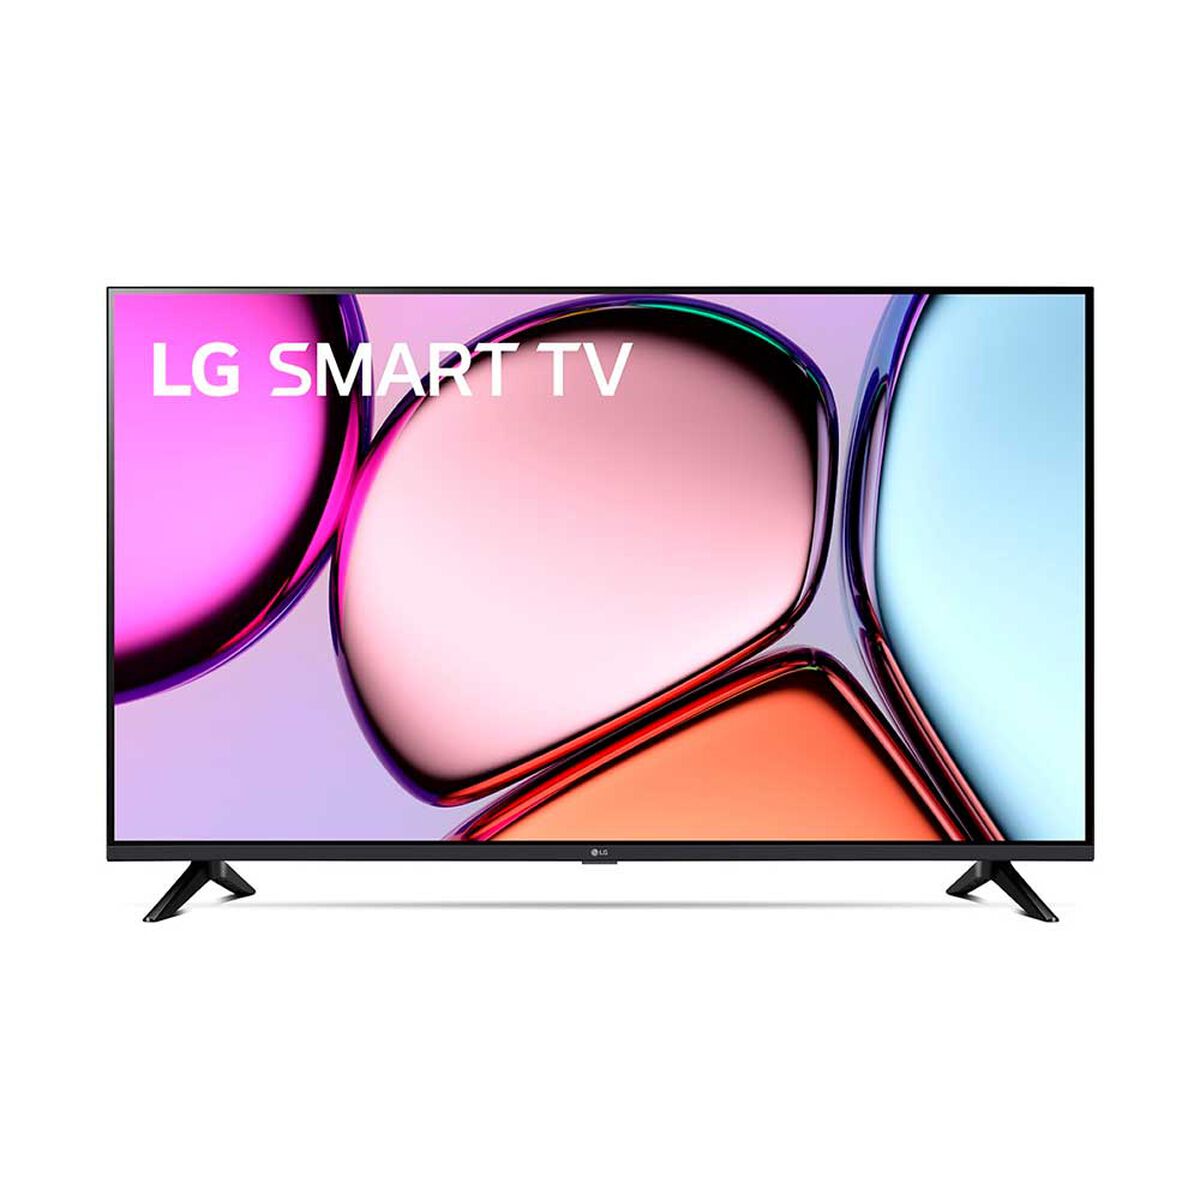 LG TV 32 Pulgadas, Comprar barato